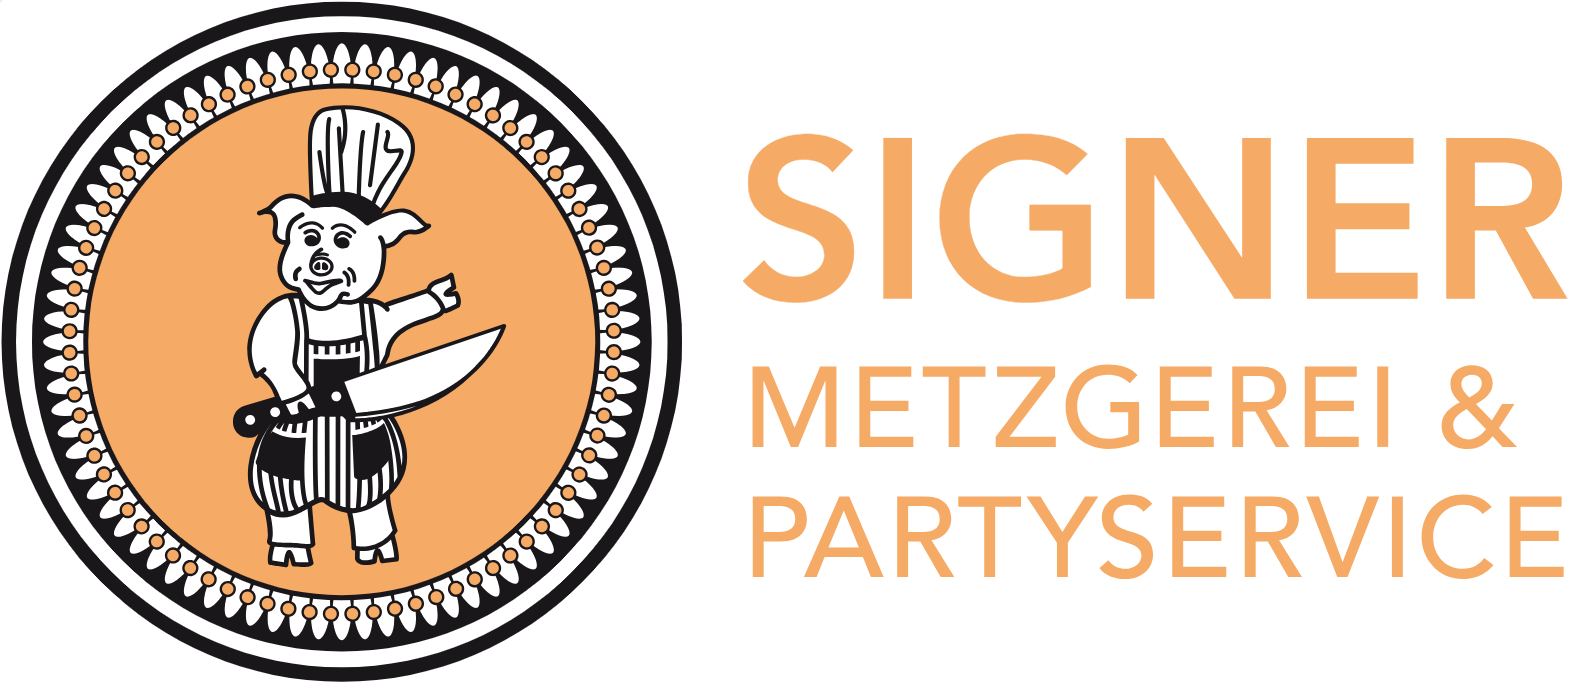 Signer Metzgerei & Partyservice